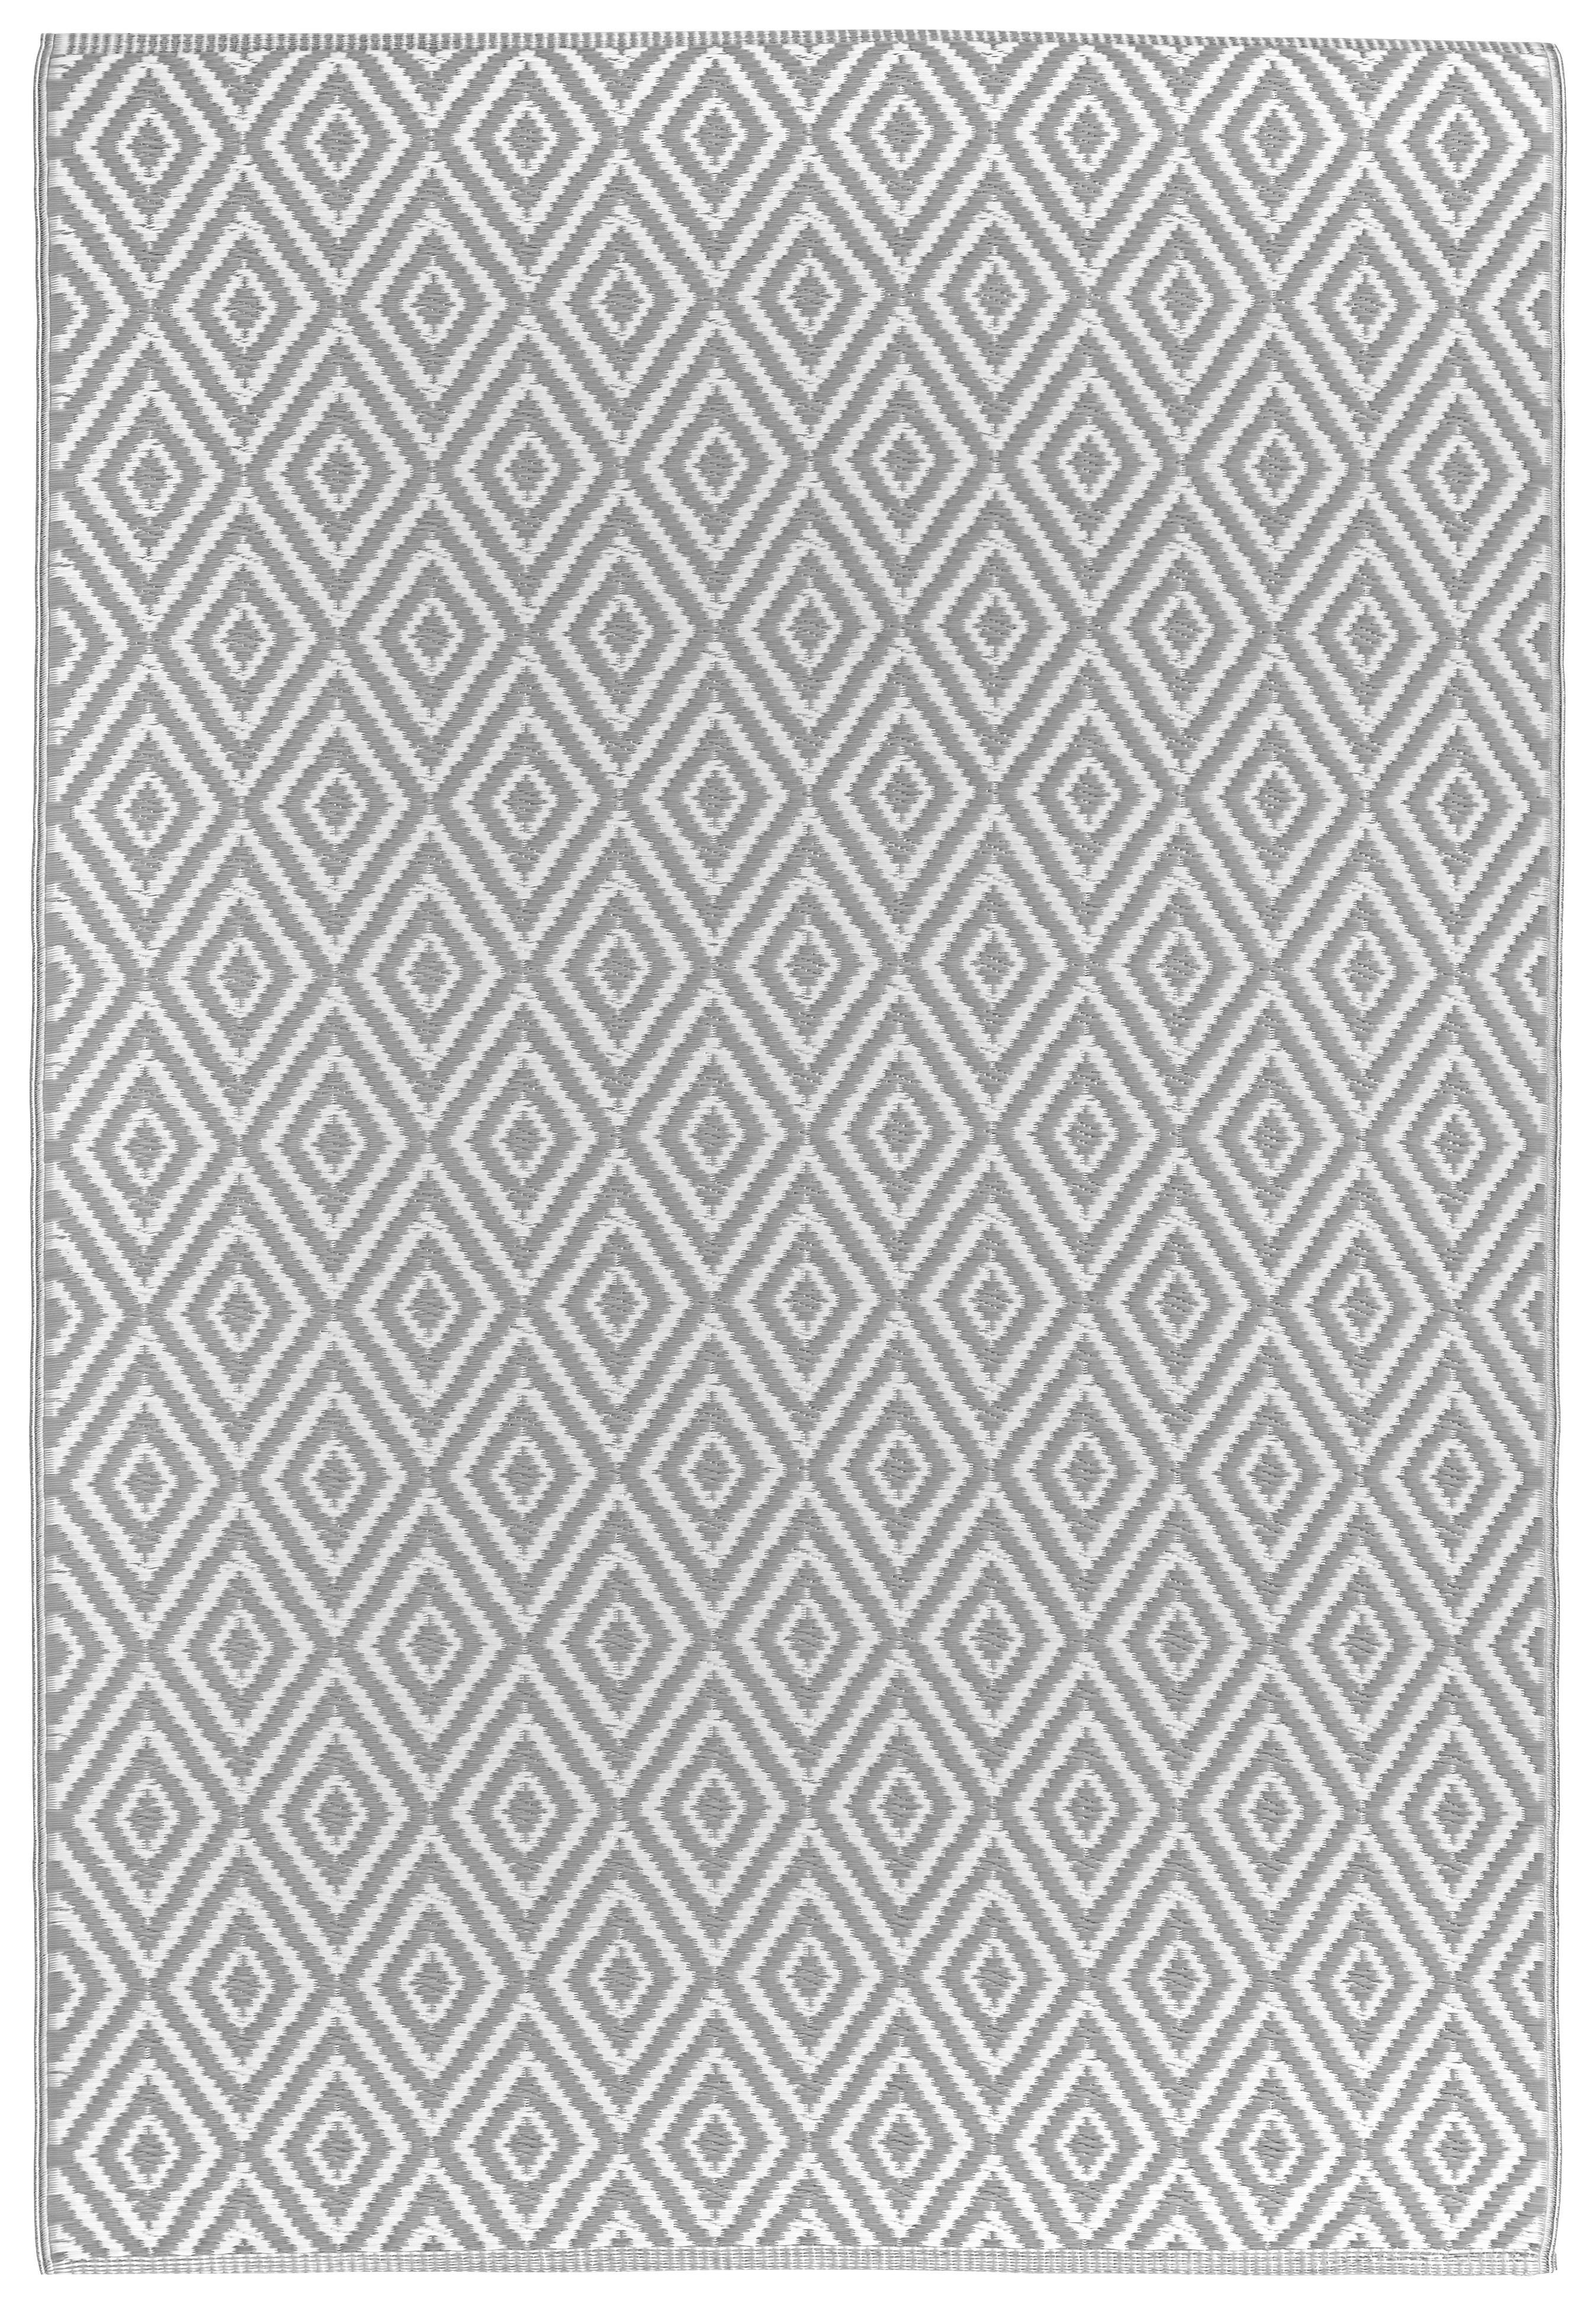 OUTDOORTEPPICH 120/180 cm Ibiza  - Weiß/Grau, Trend, Textil (120/180cm) - Boxxx